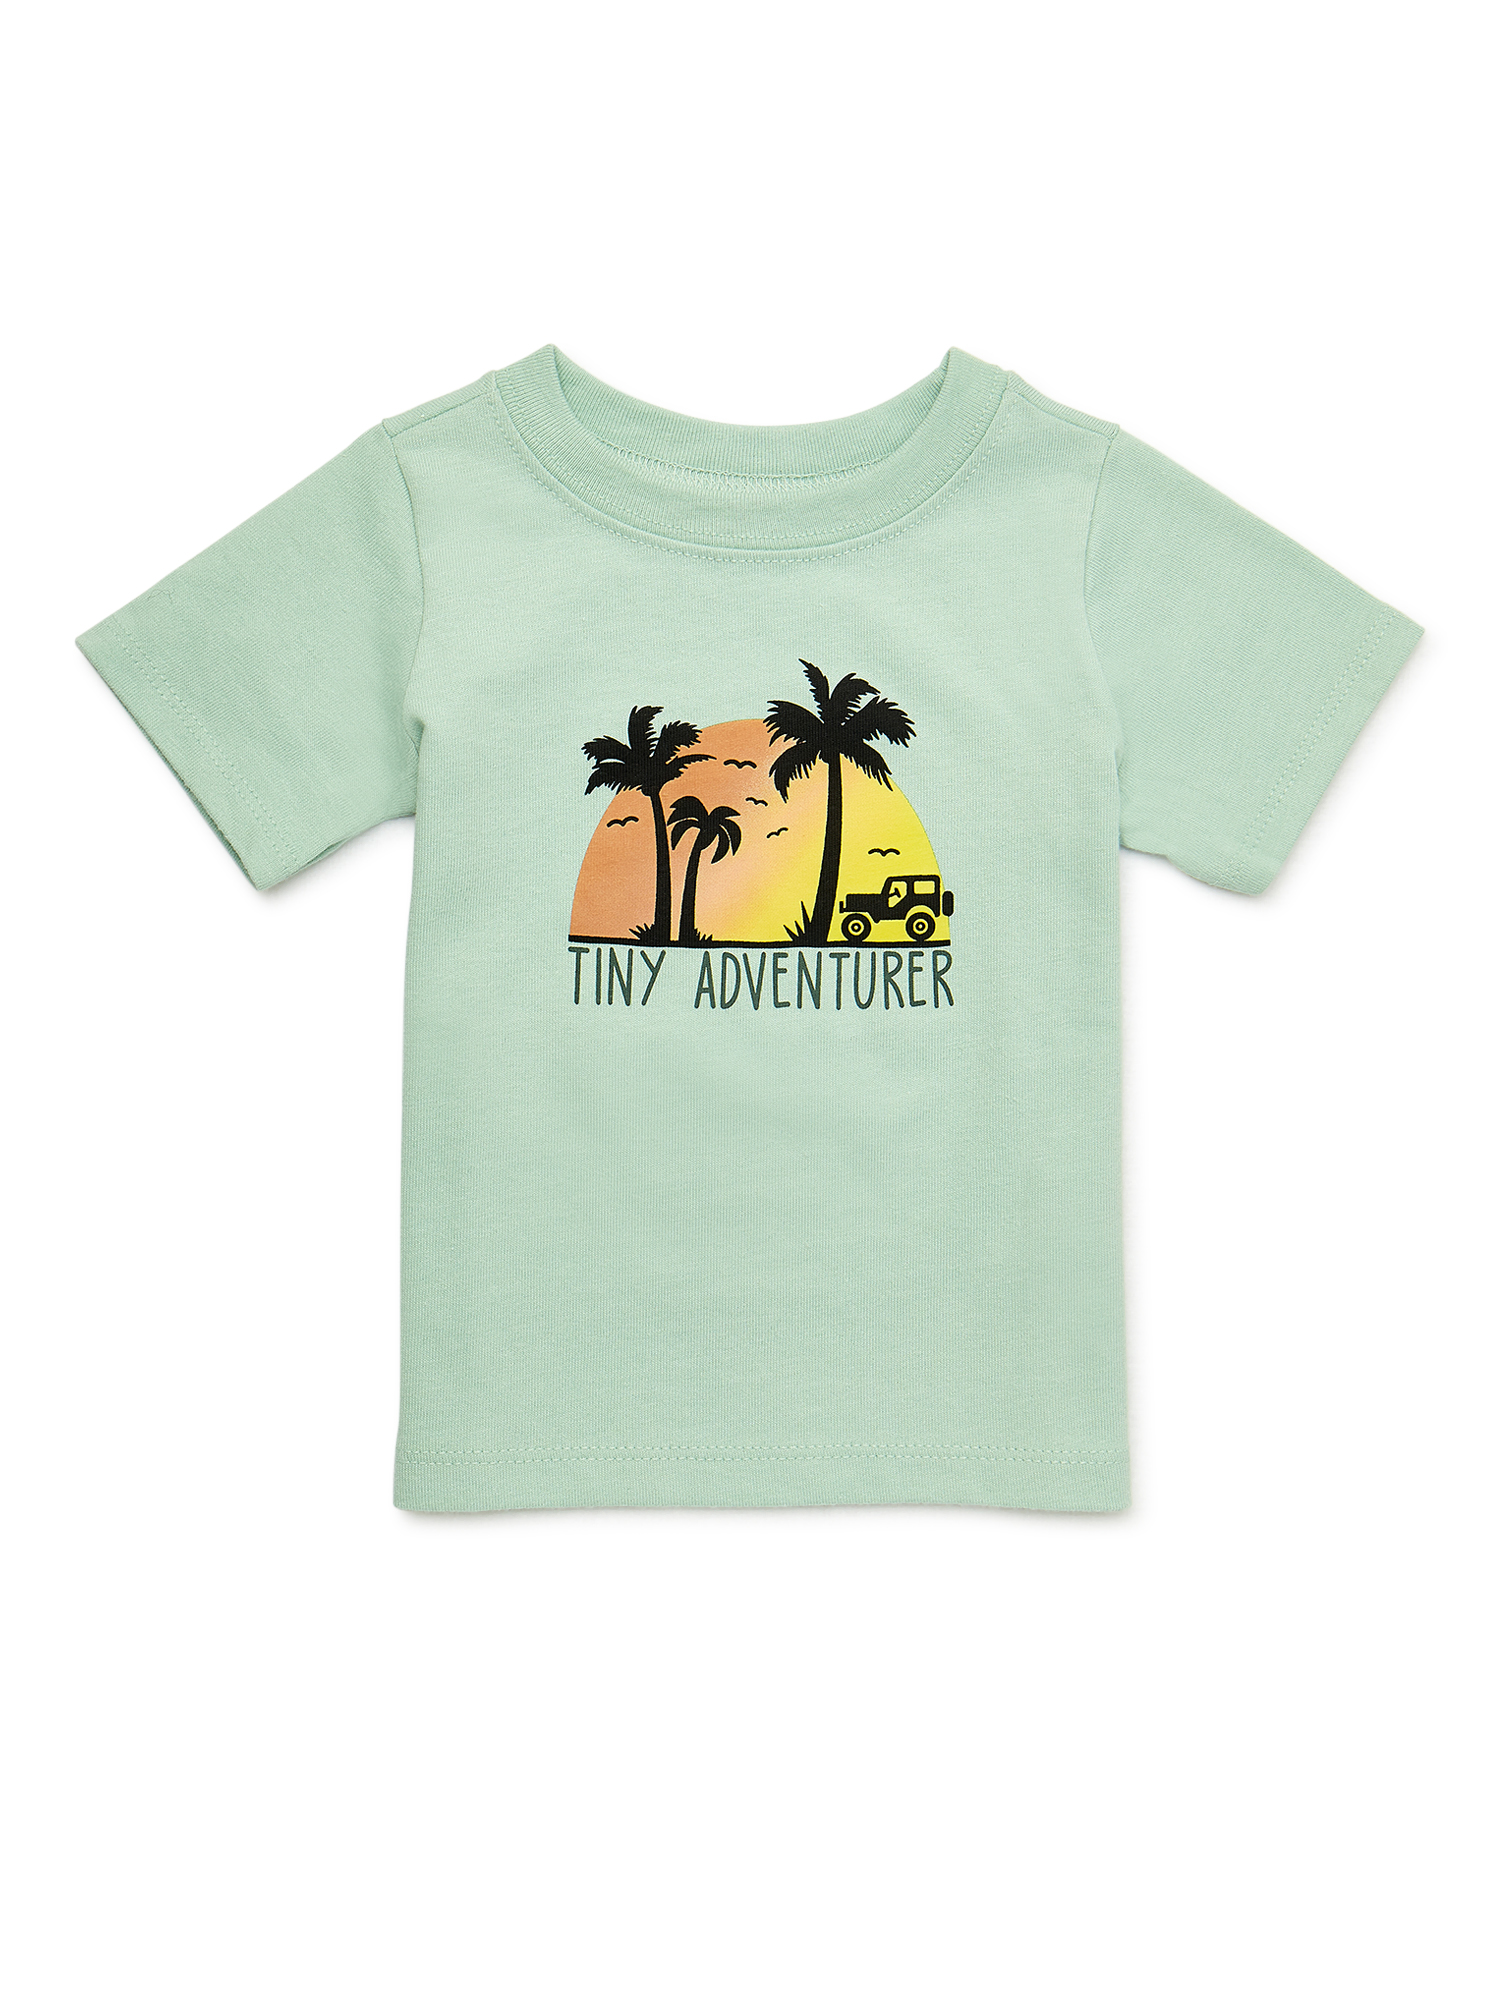 Garanimals Baby Boy Short Sleeve Graphic T-Shirt, Sizes 0-24 Months - image 1 of 4